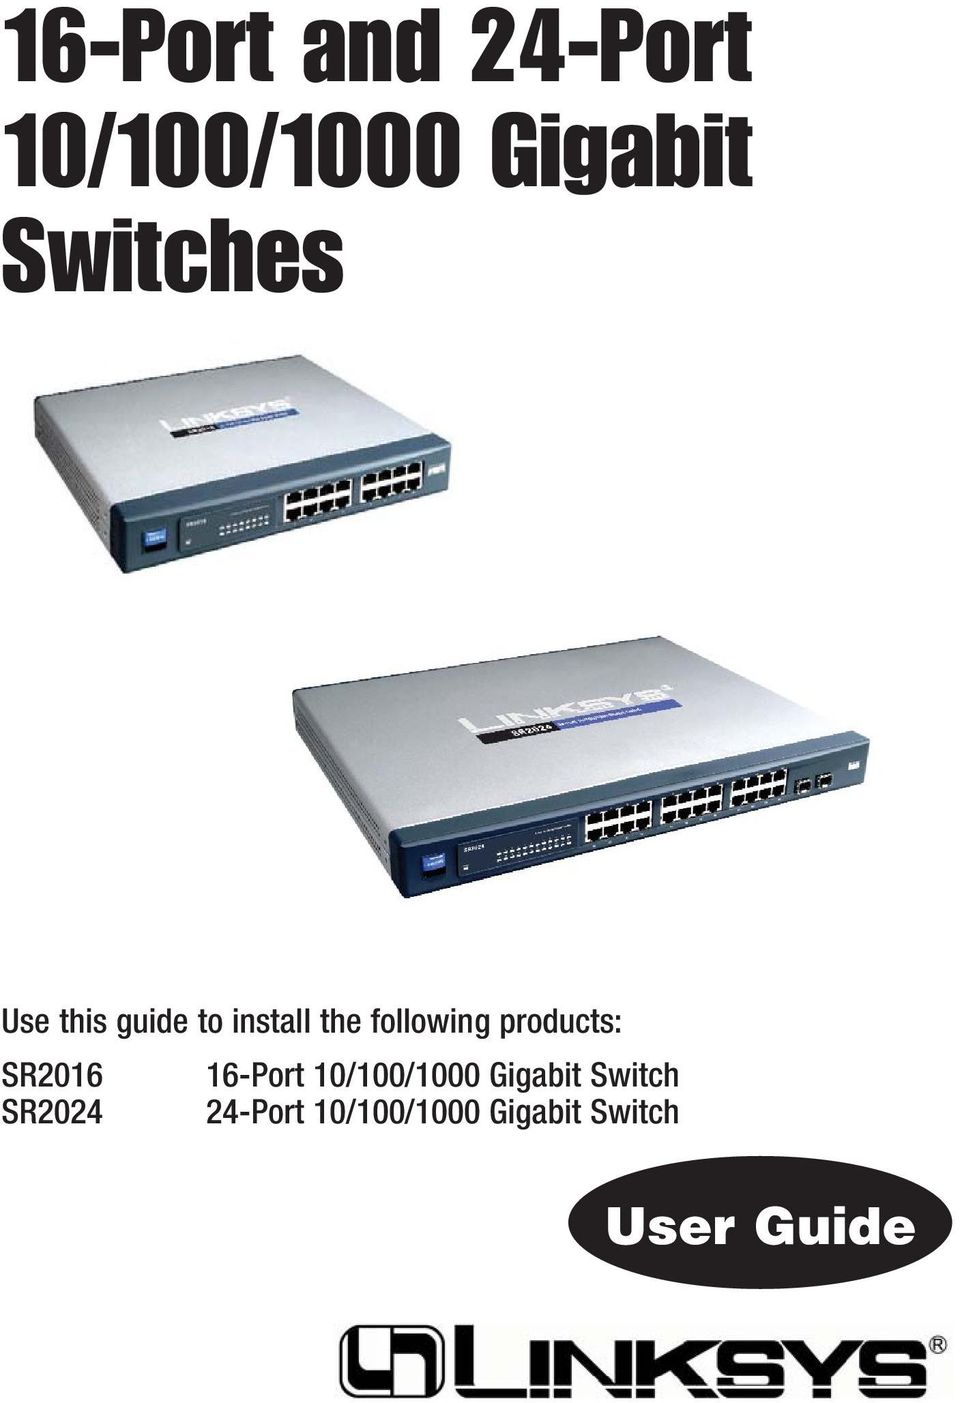 products: SR2016 16-Port 10/100/1000 Gigabit